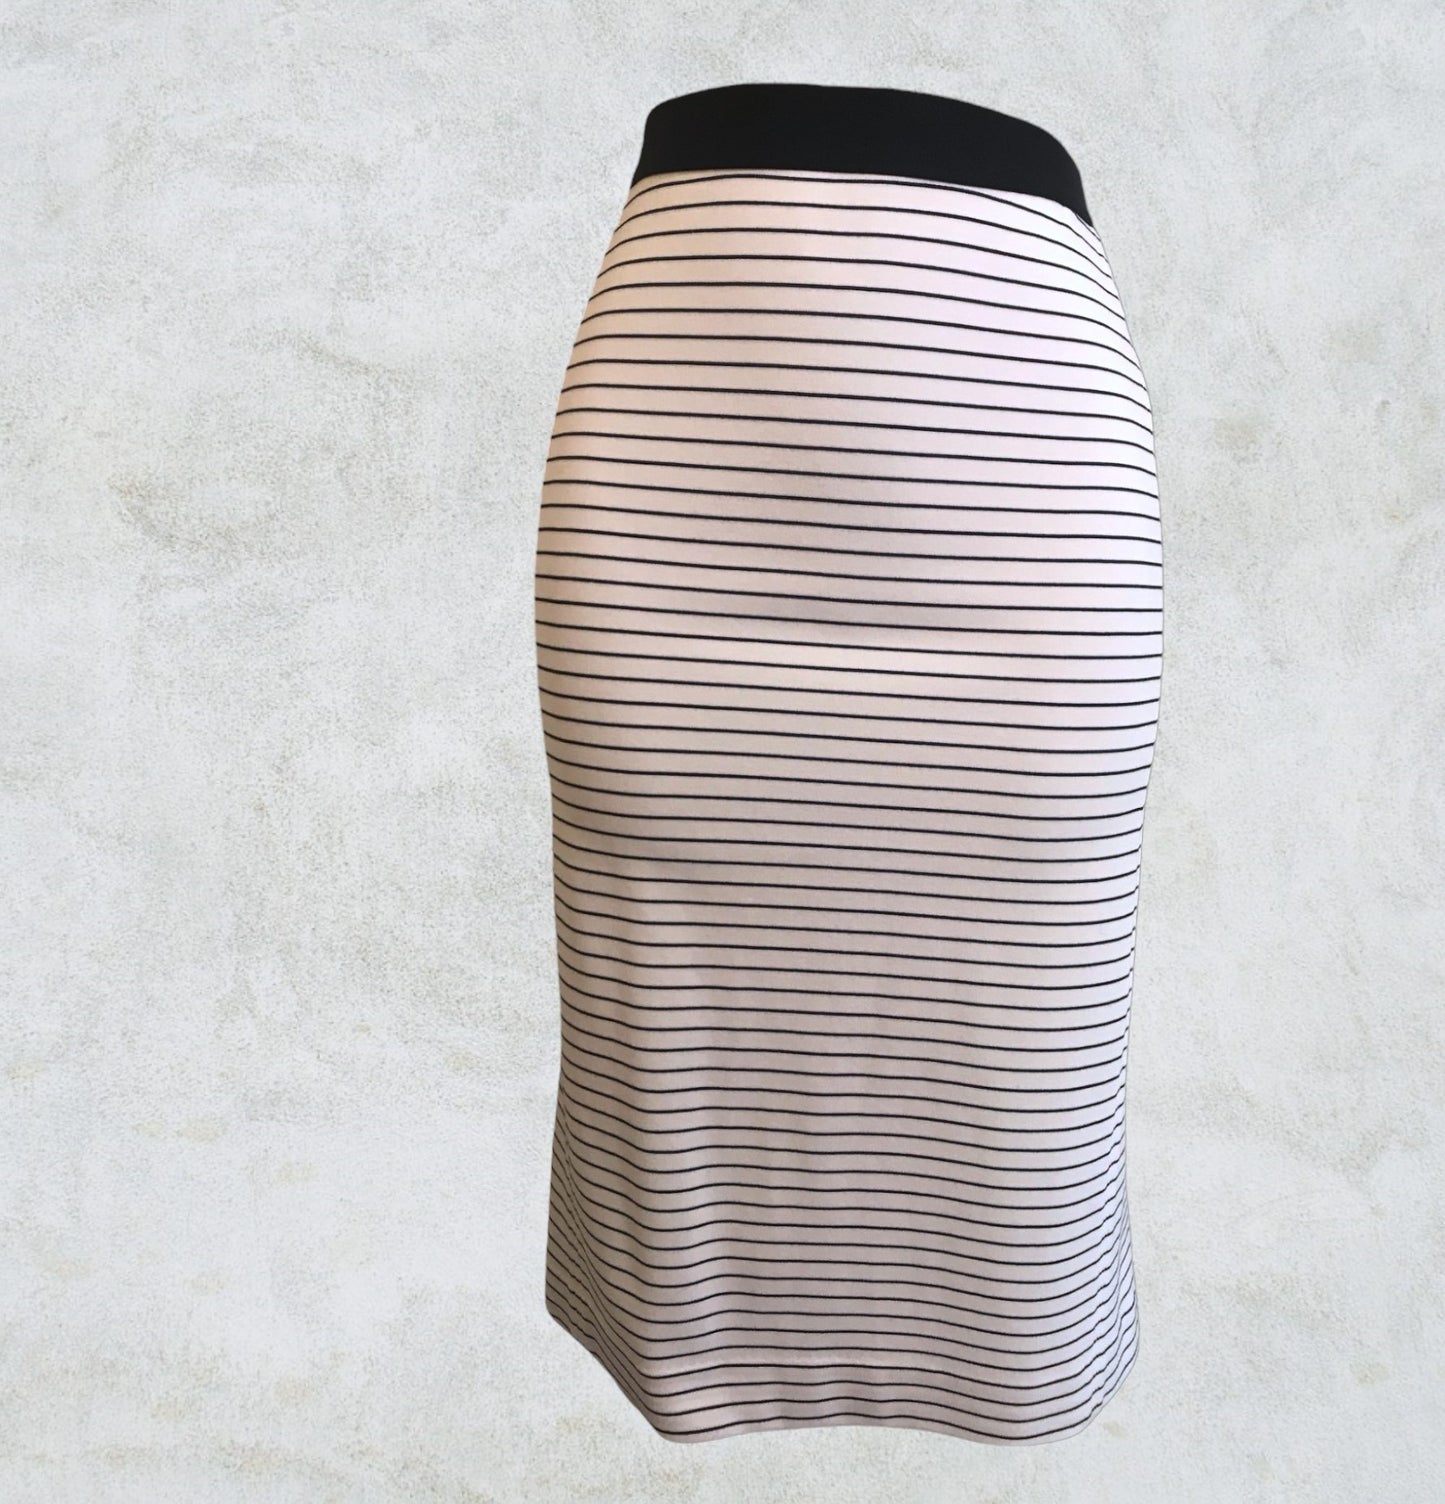 Uniqlo Womens White Black Striped Stretch Pencil Skirt UK 10 Timeless Fashions